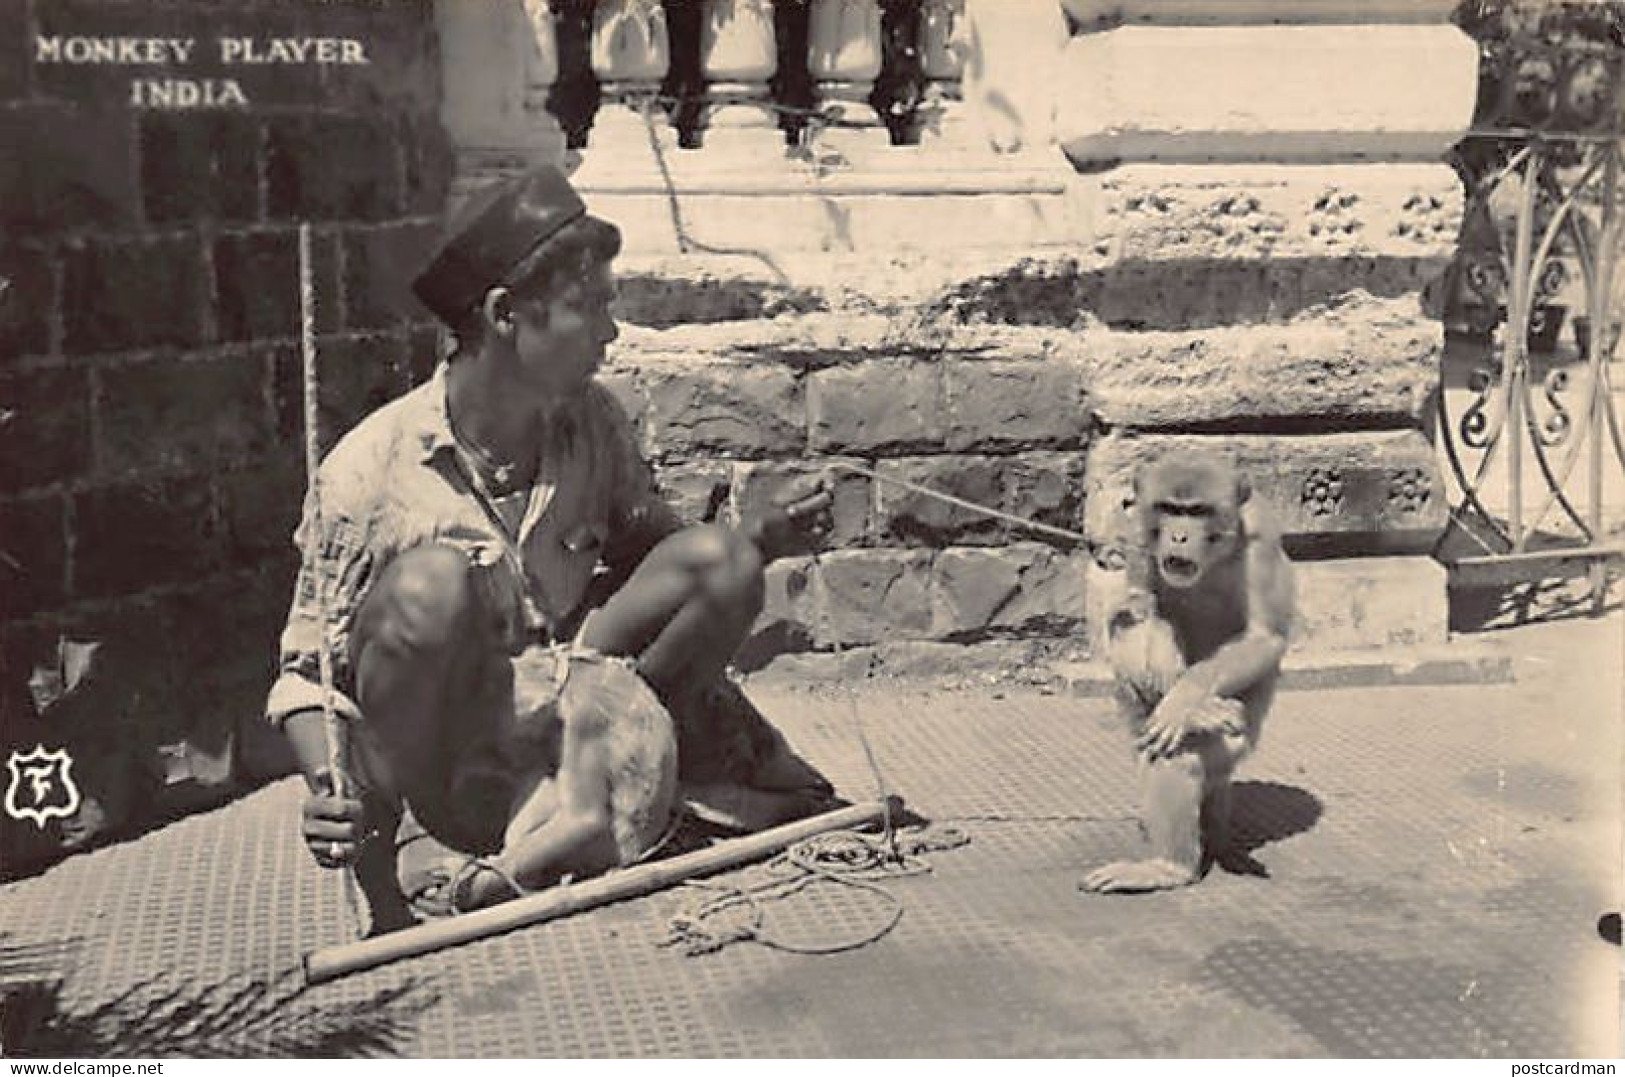 India - Monkey Player - REAL PHOTO - India